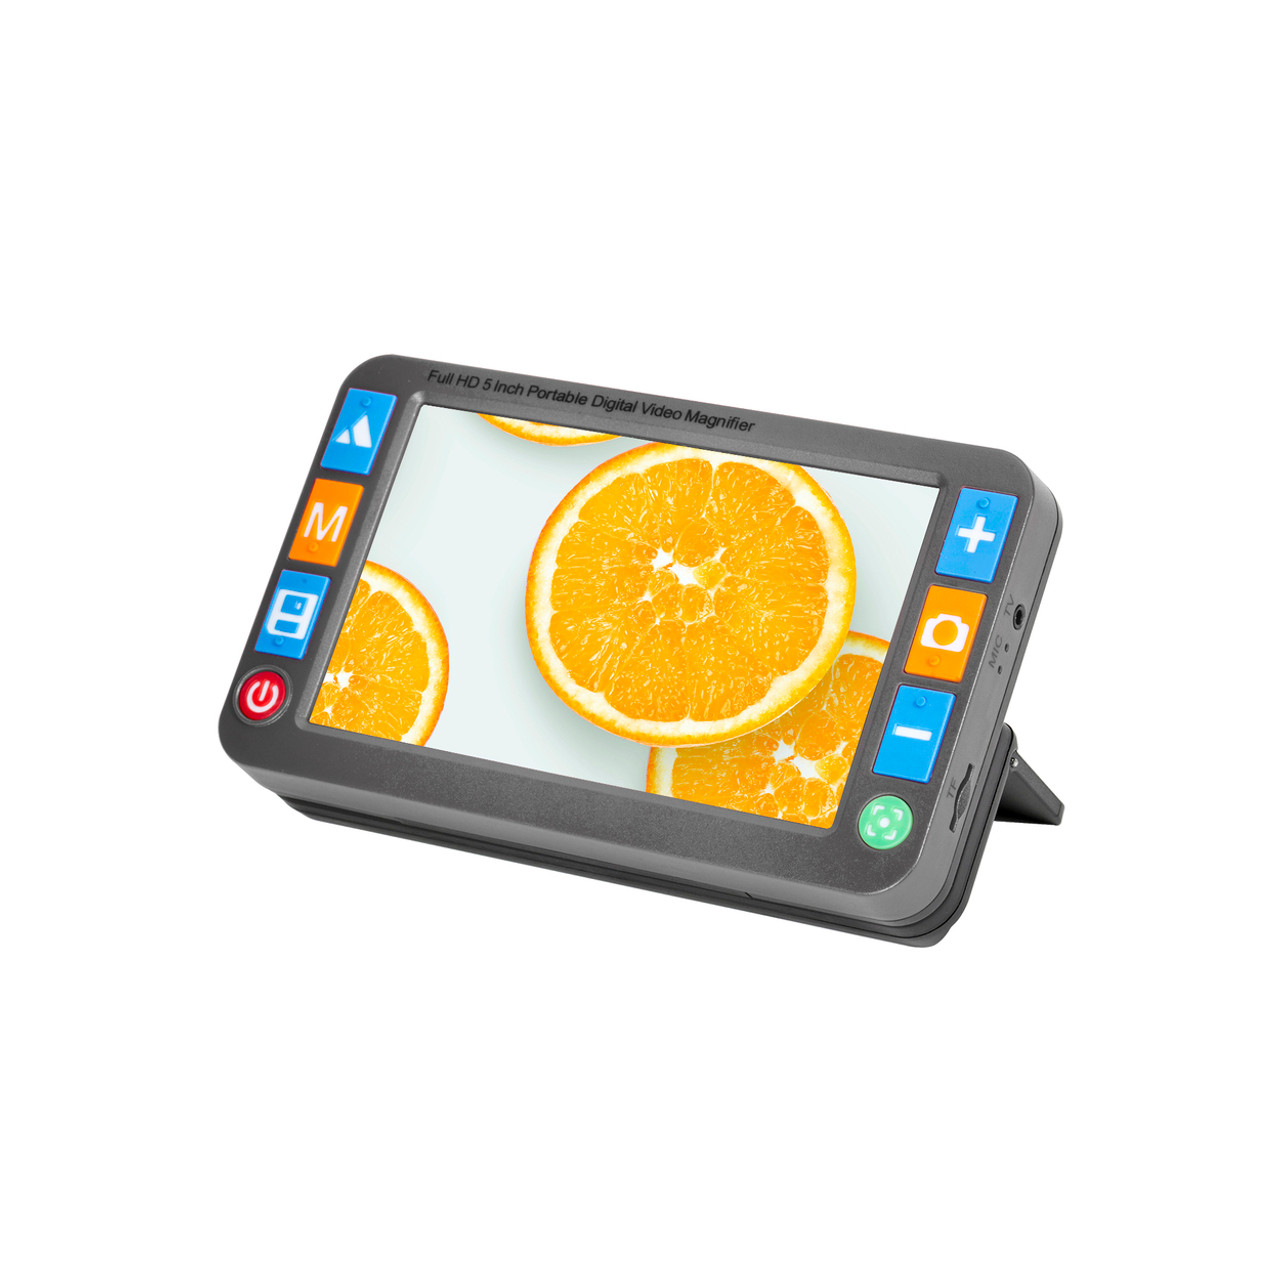 Thumbright Pocket Magnifier 3X LED Pocket Magnifier | Ila